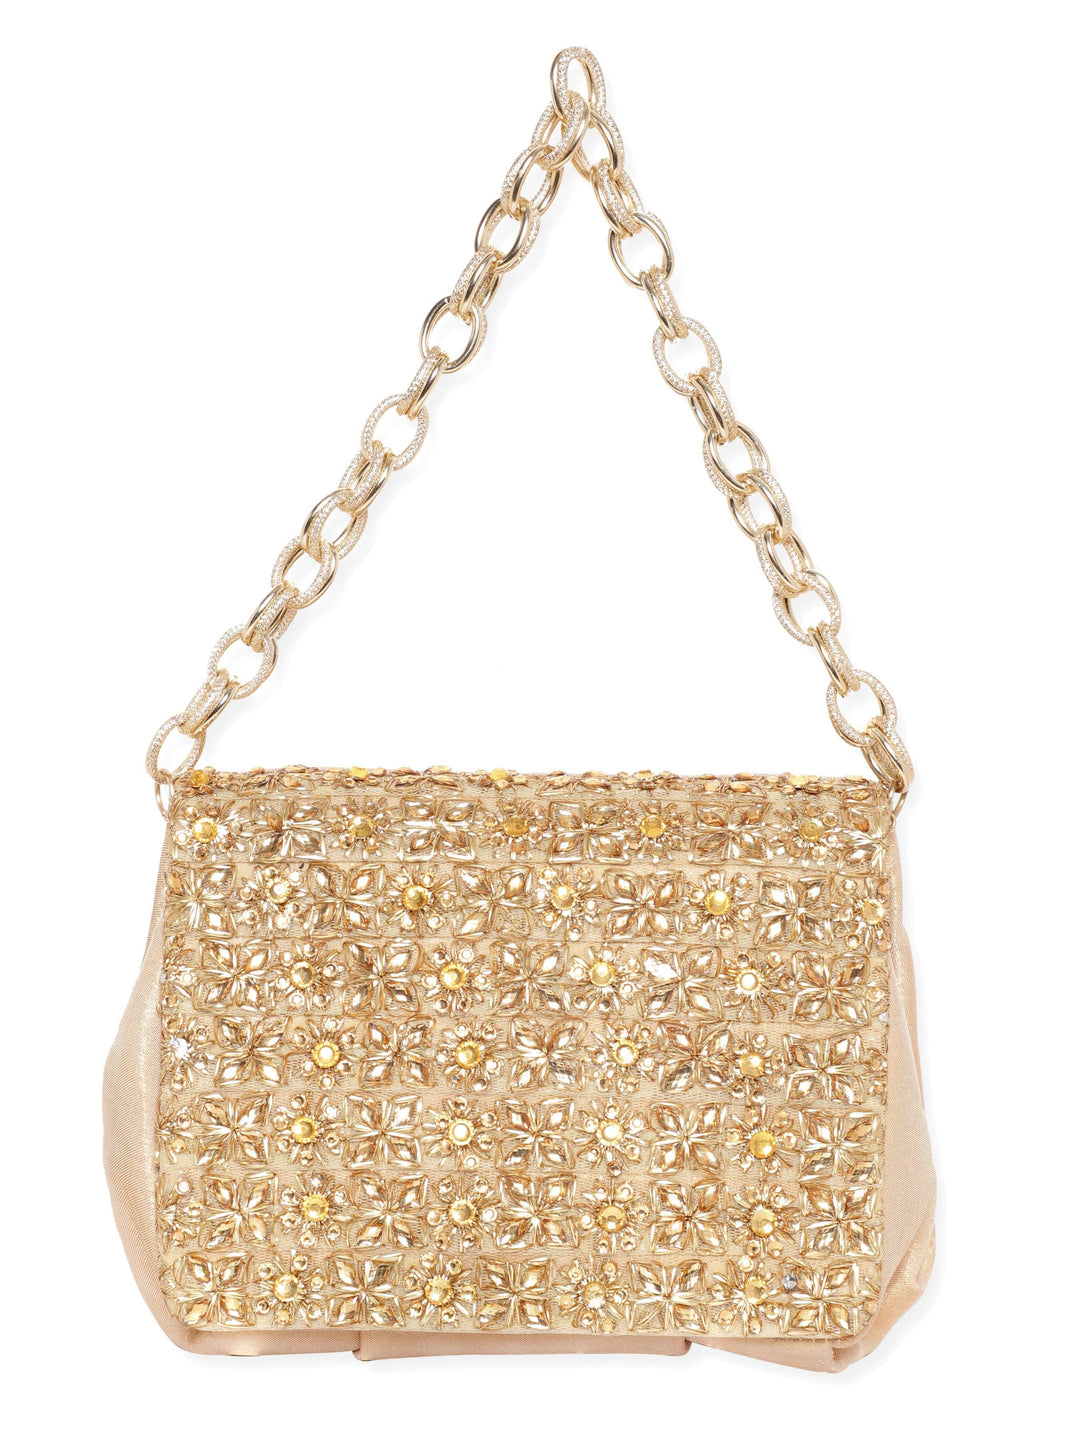 Chic Glimmer Gold Handbag with Beaded Embellishments - Modern Elegance Handbag, Wallet Accessories & Clutches